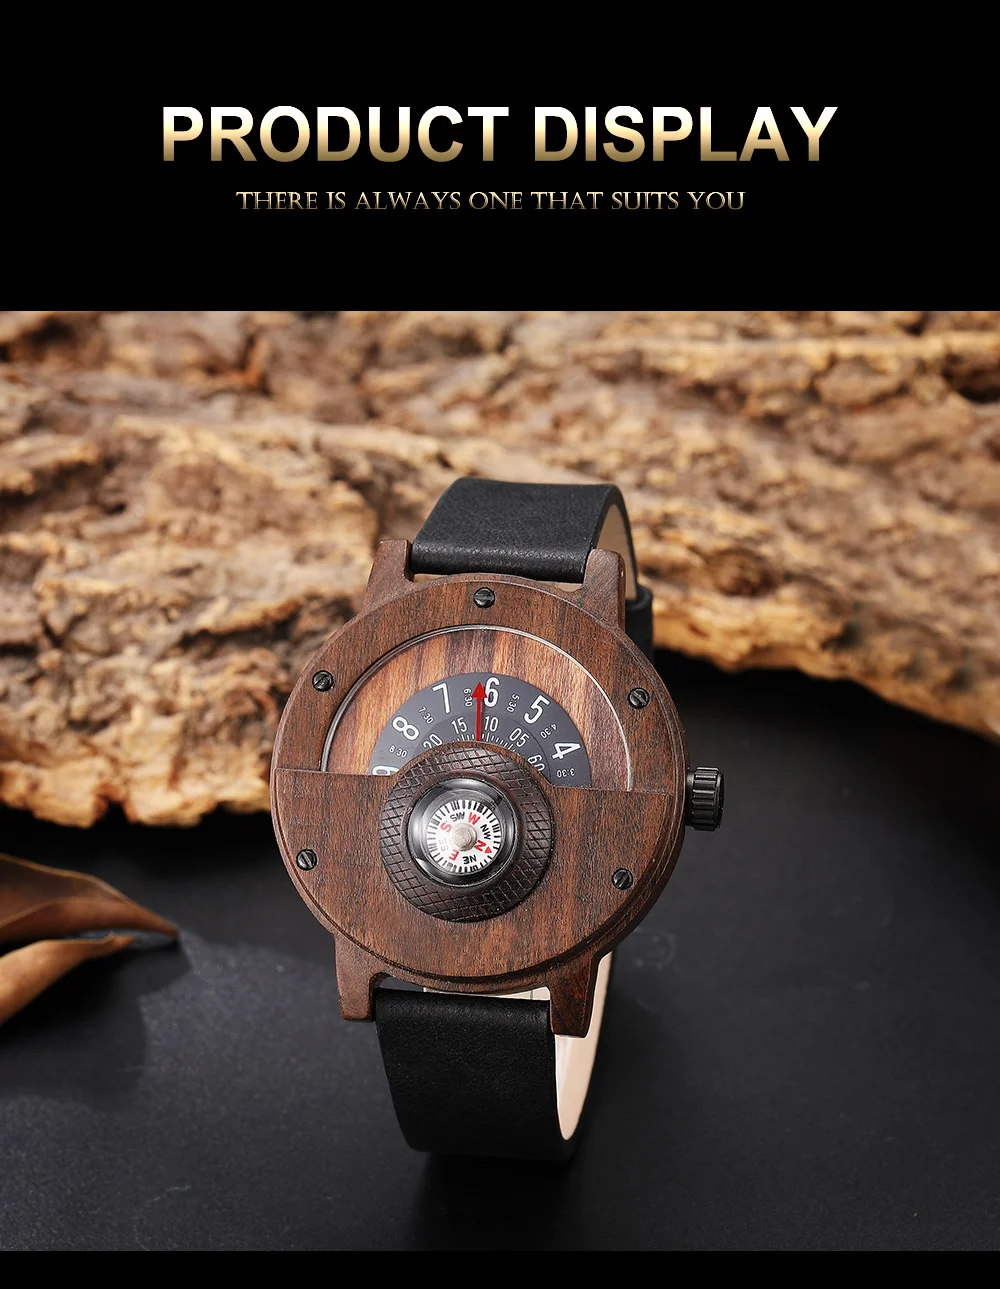 Creative Wood Watch Unique Compass Turntable Wood Watches Men's Semicircle Dial Clock Quartz Clock Retro Hour Relogio Masculino